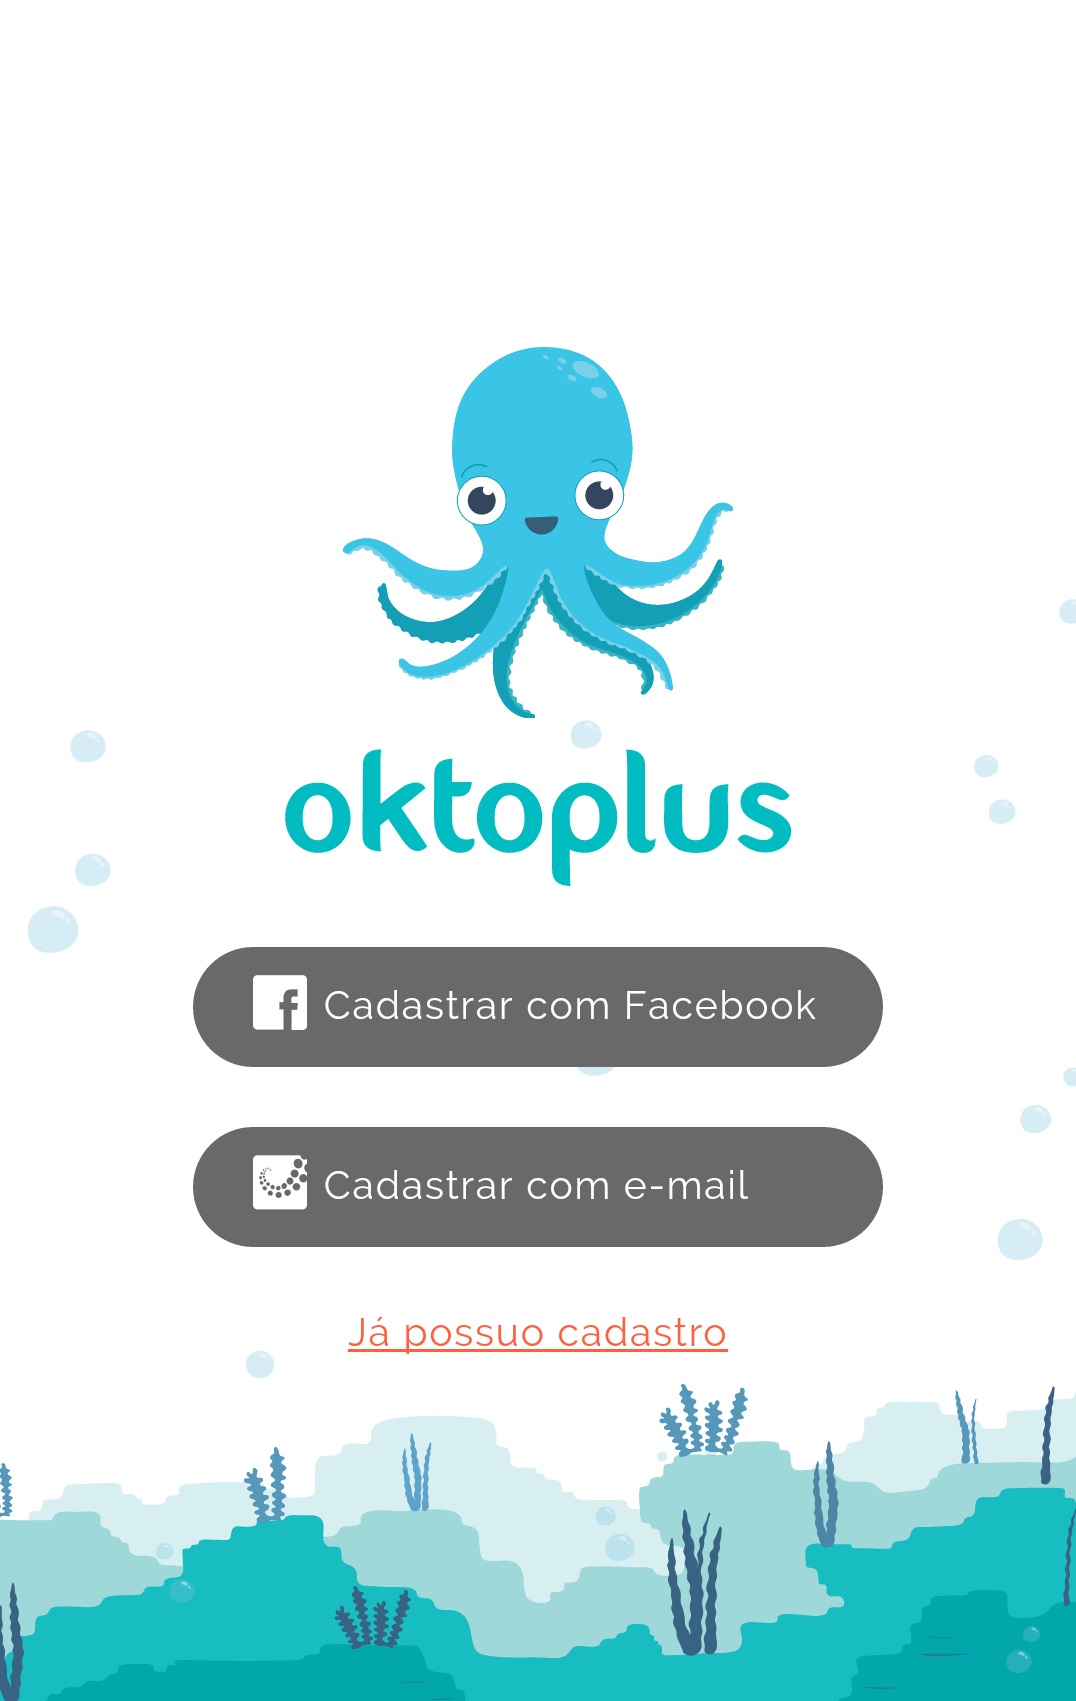 cadastro-app-oktoplus-1